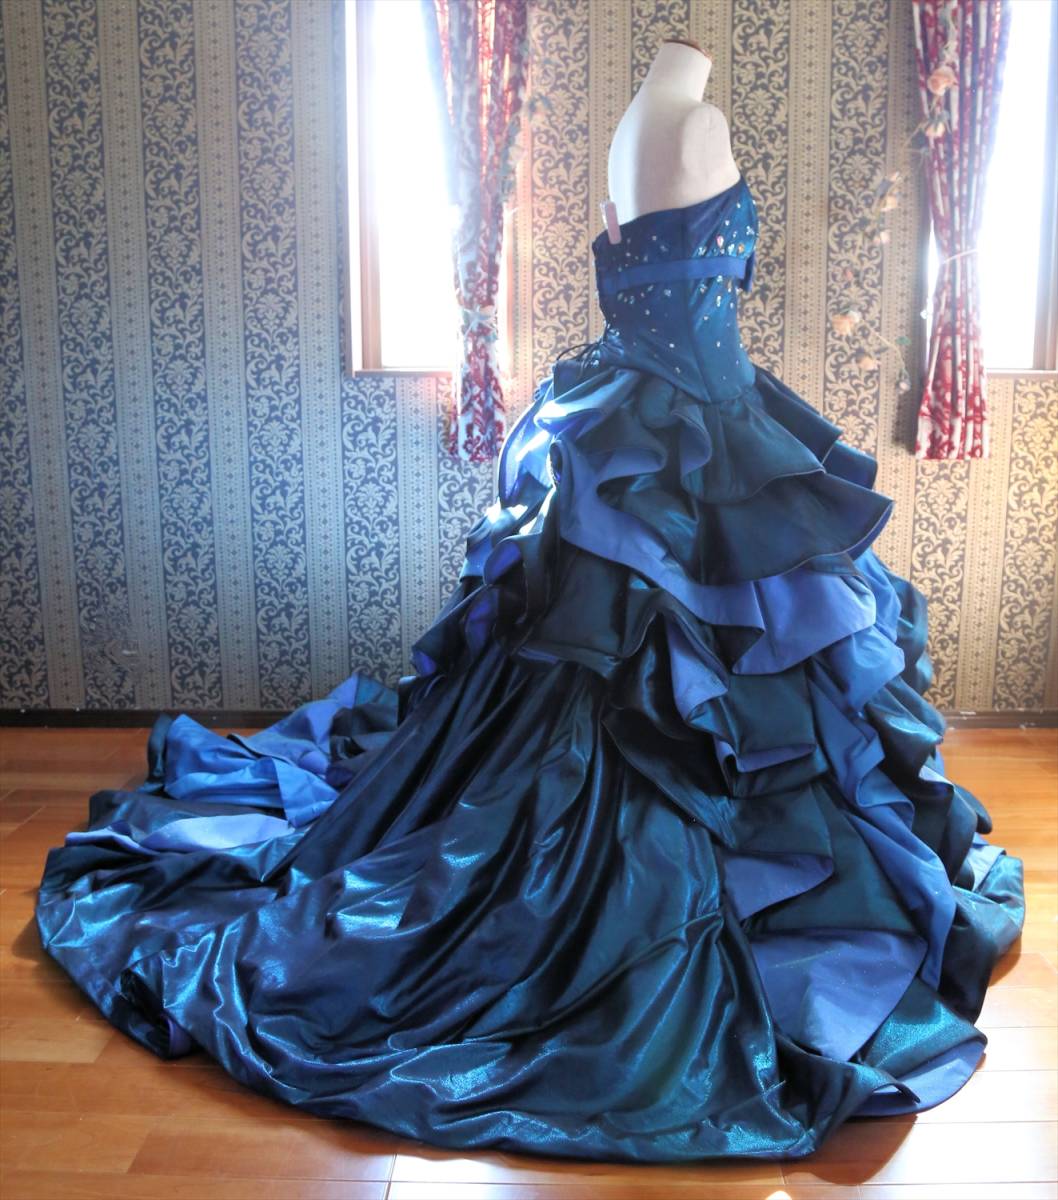  large size high class wedding dress 13 number 15 number 17 number LL~4L size blue group color dress compilation up adjustment possibility 